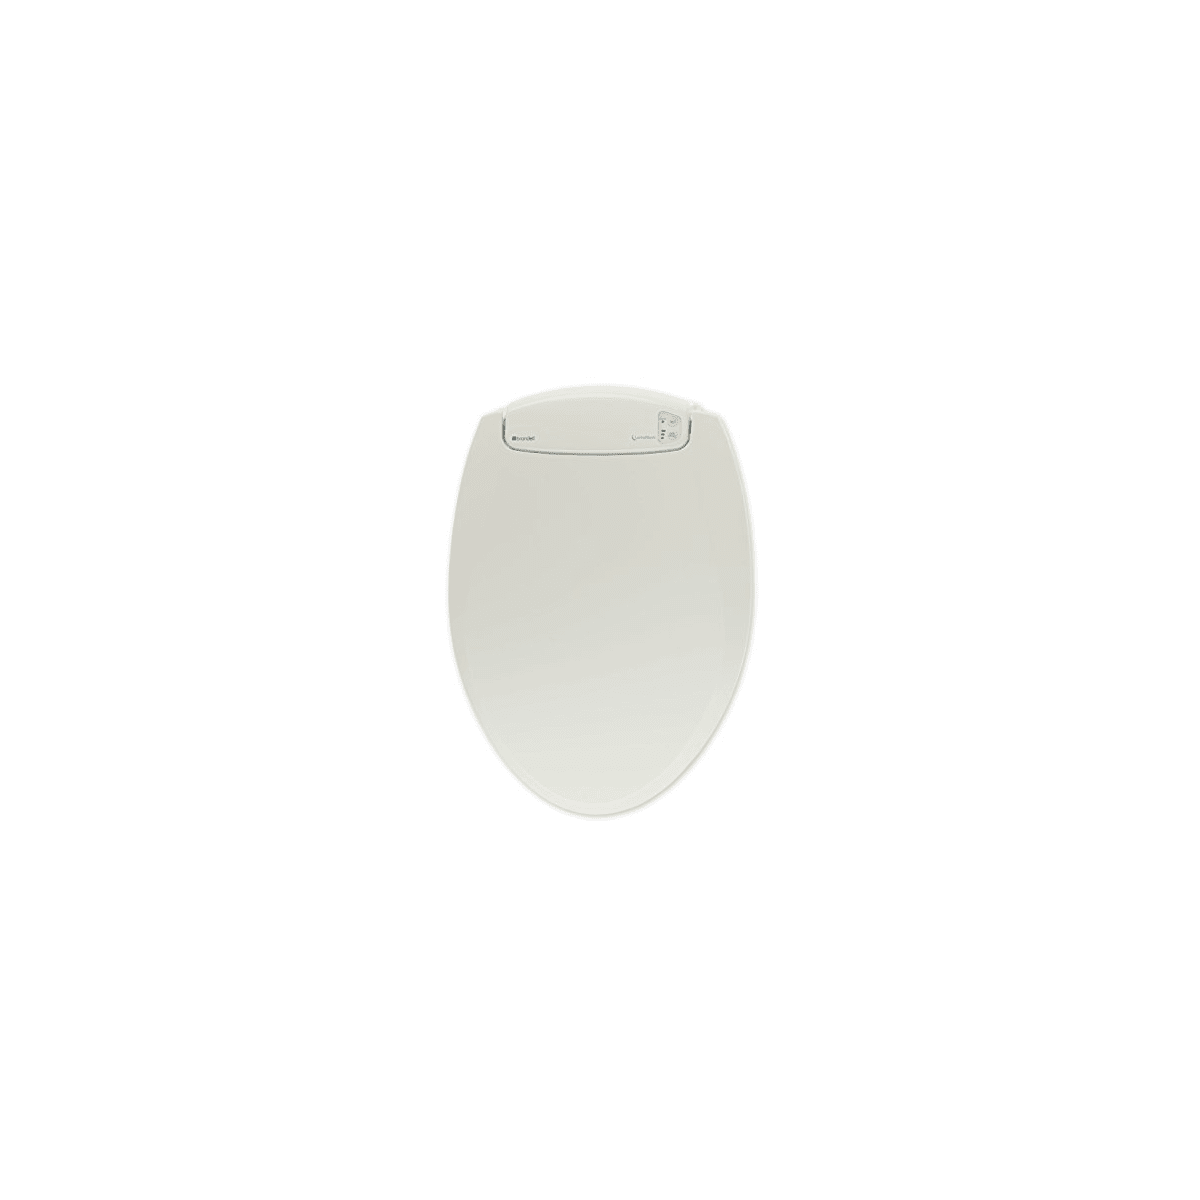 Brondell L60 LumaWarm Heated Nightlight Round Toilet Seat, White